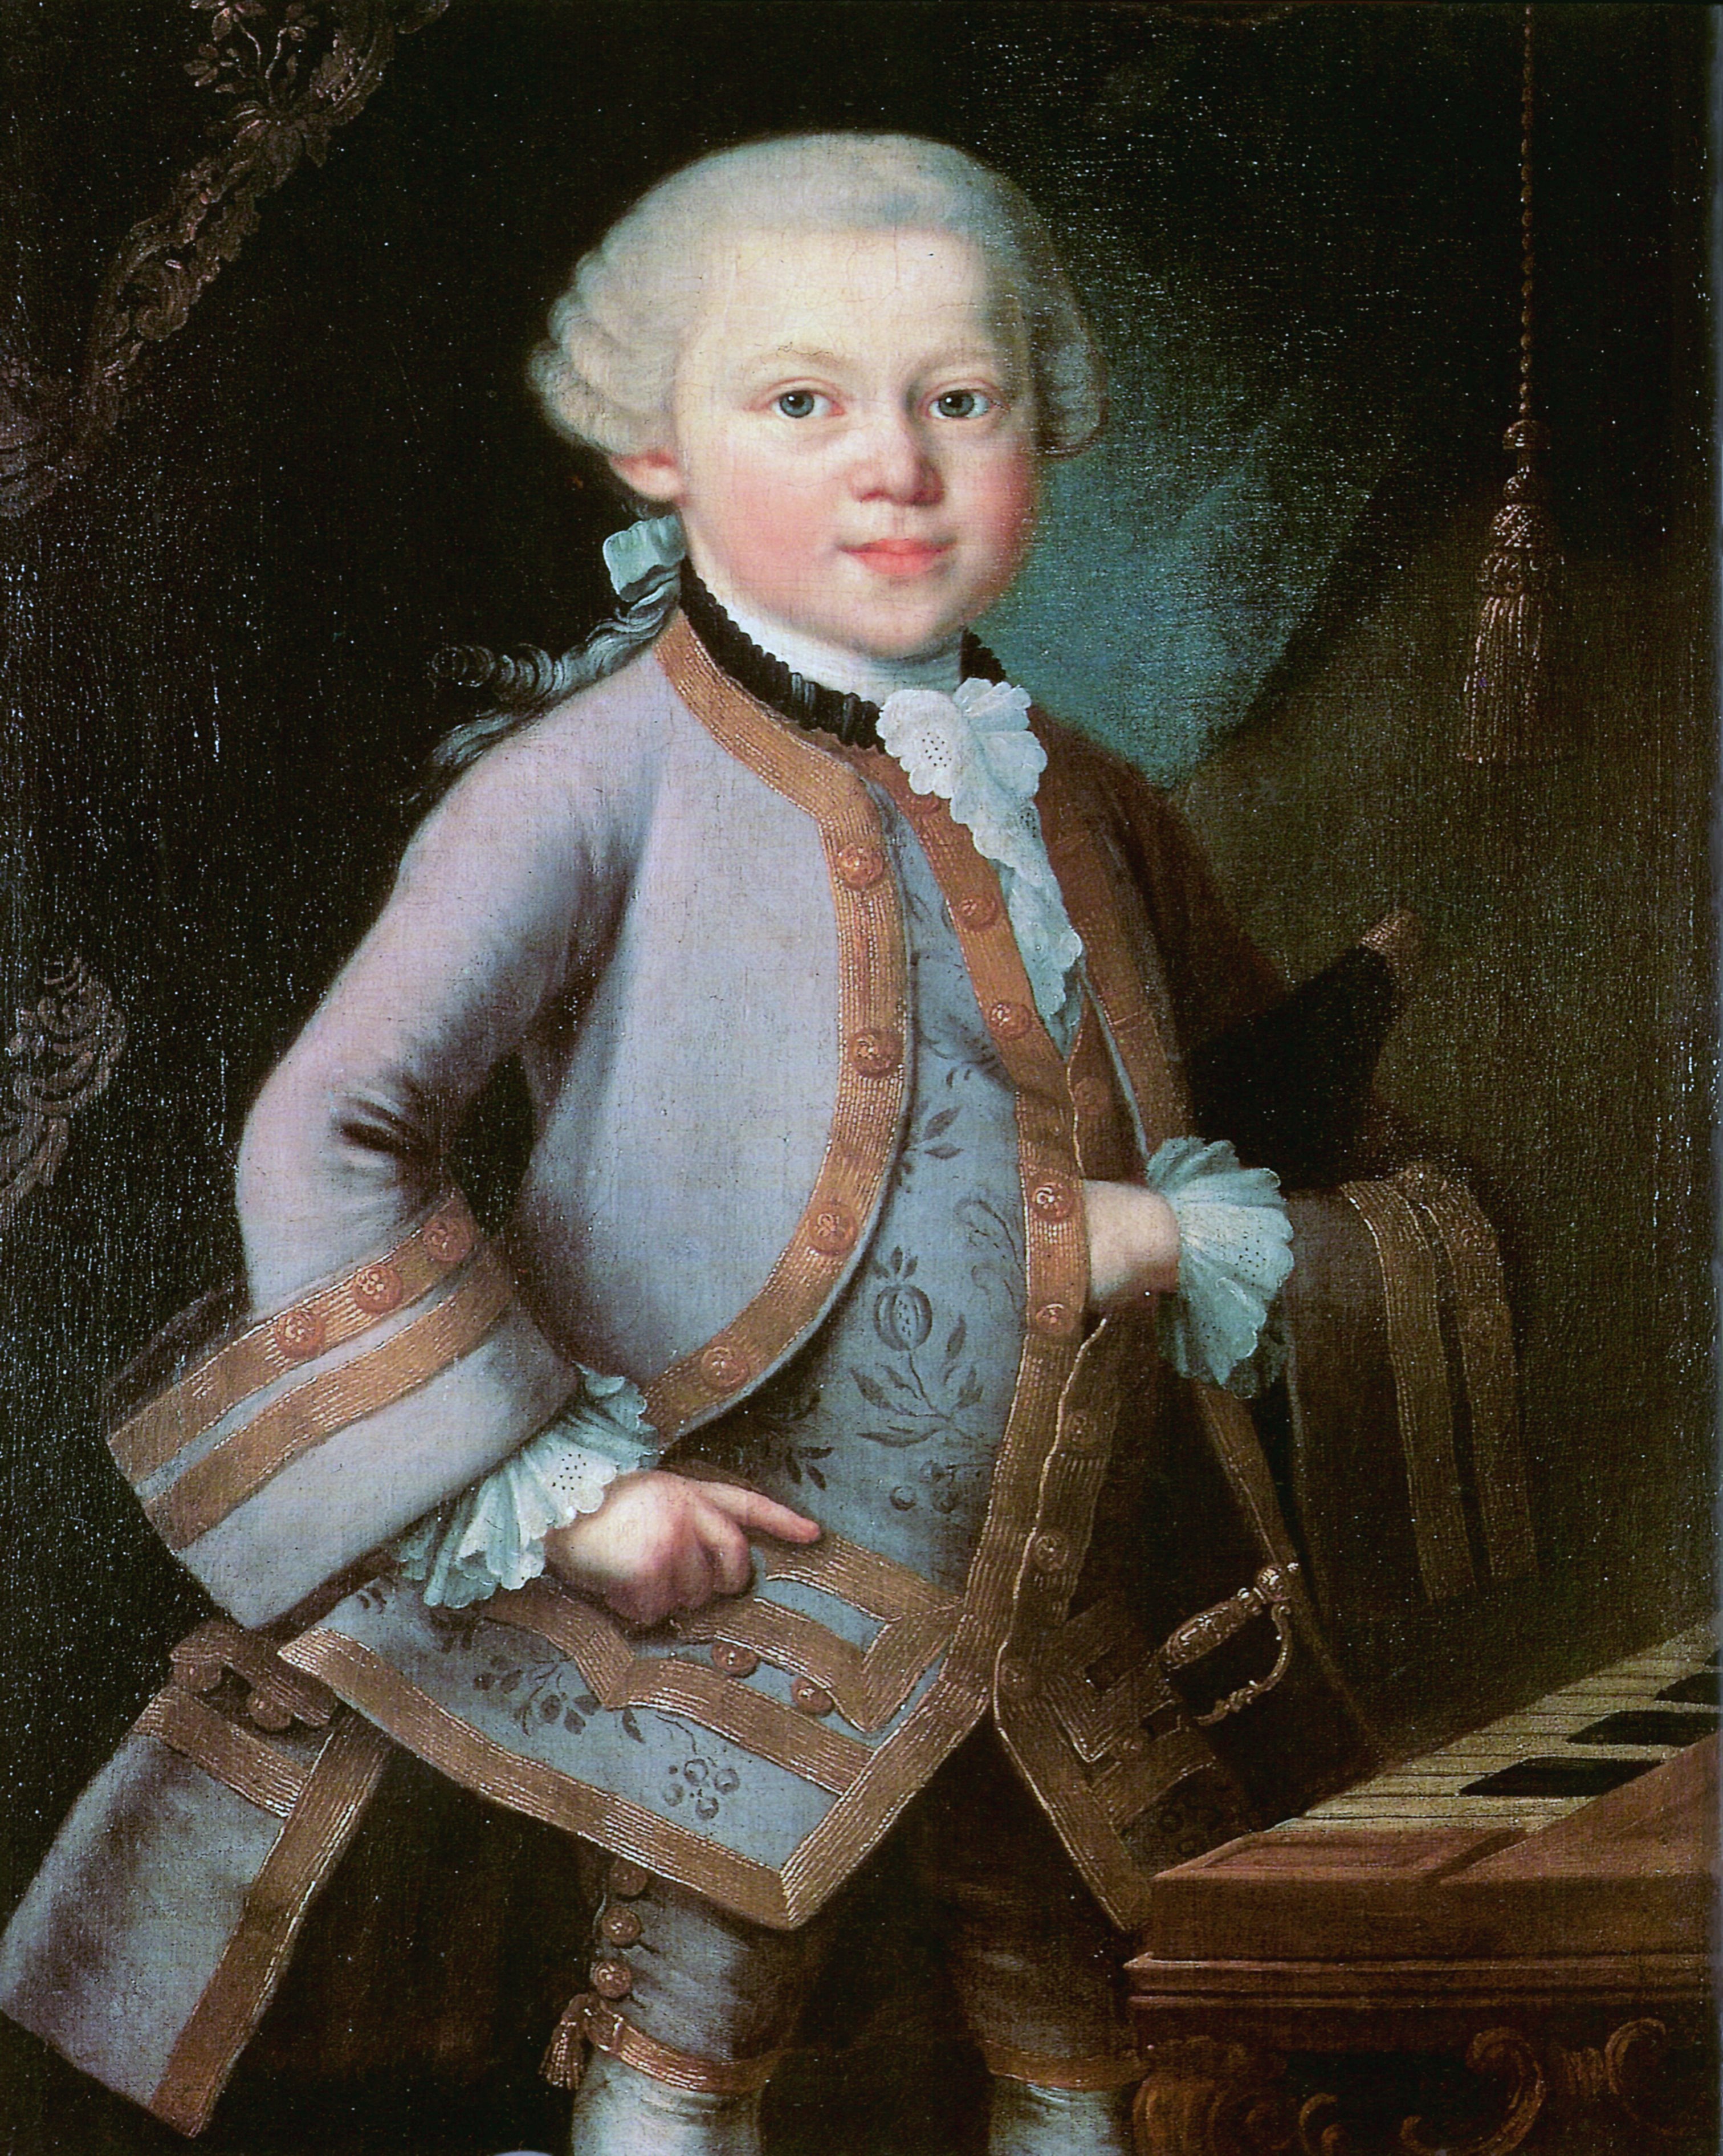 Wolfgang Amadeus Mozart: accomplishments, amadeus, artist